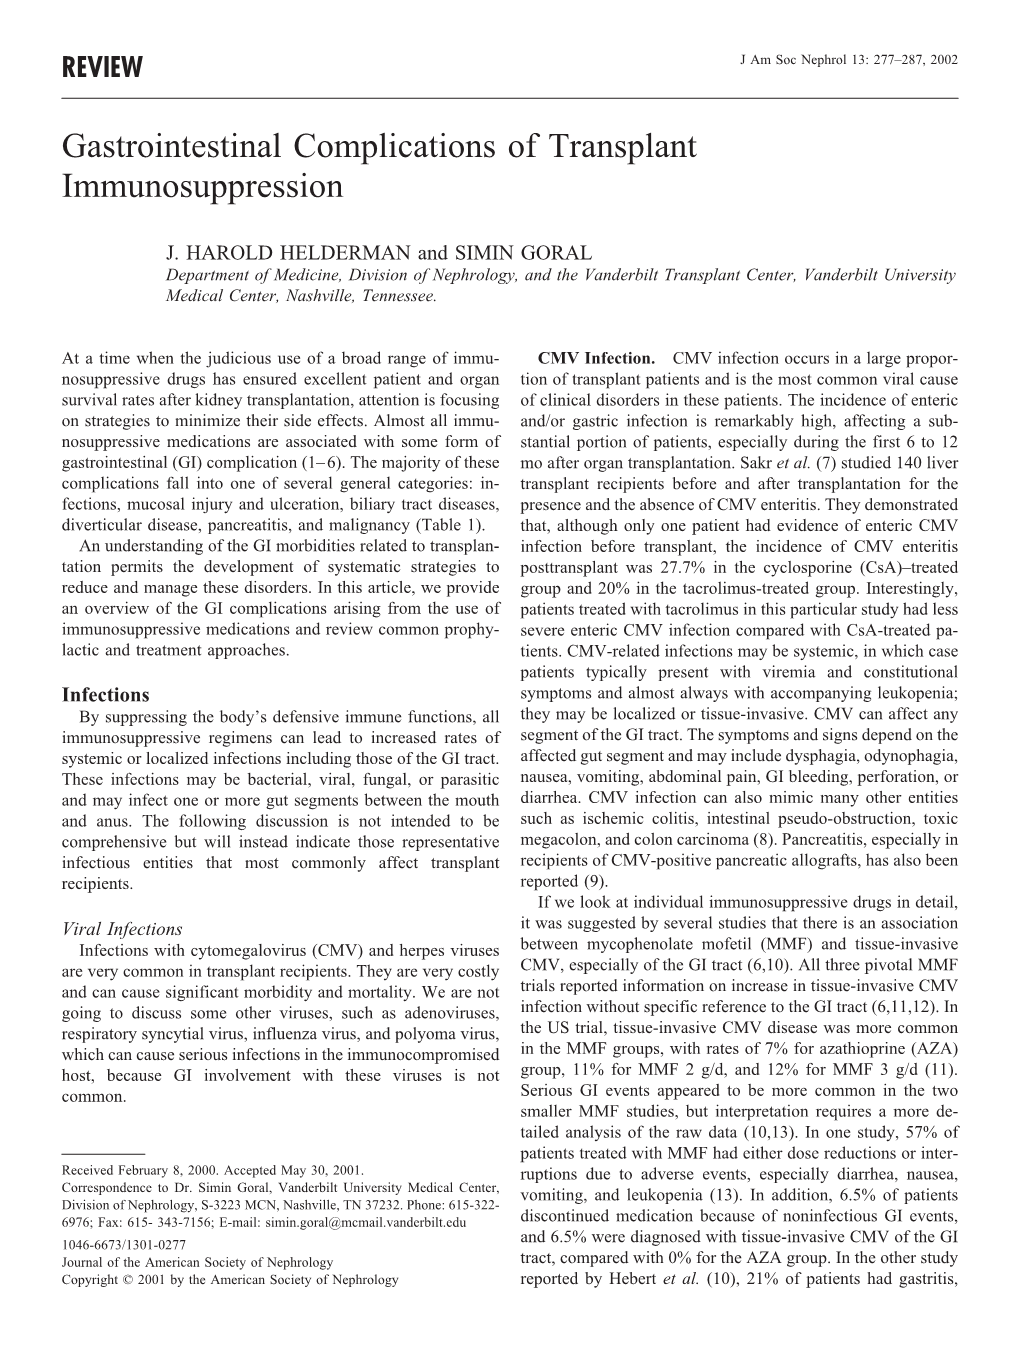 Gastrointestinal Complications of Transplant Immunosuppression